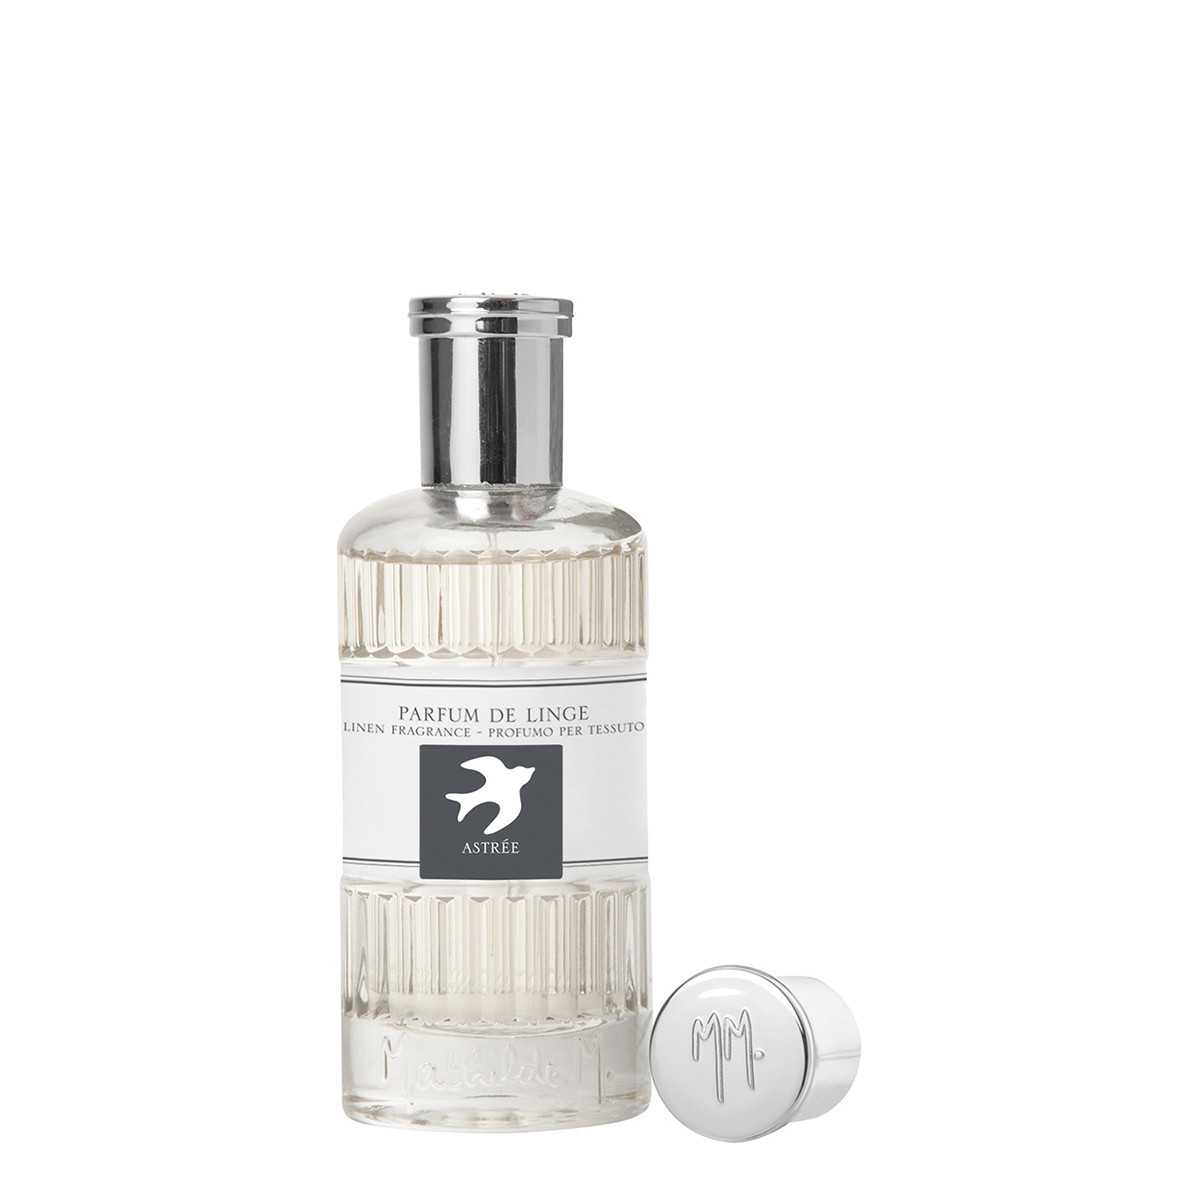 Lino perfume 75 ml - Astrée